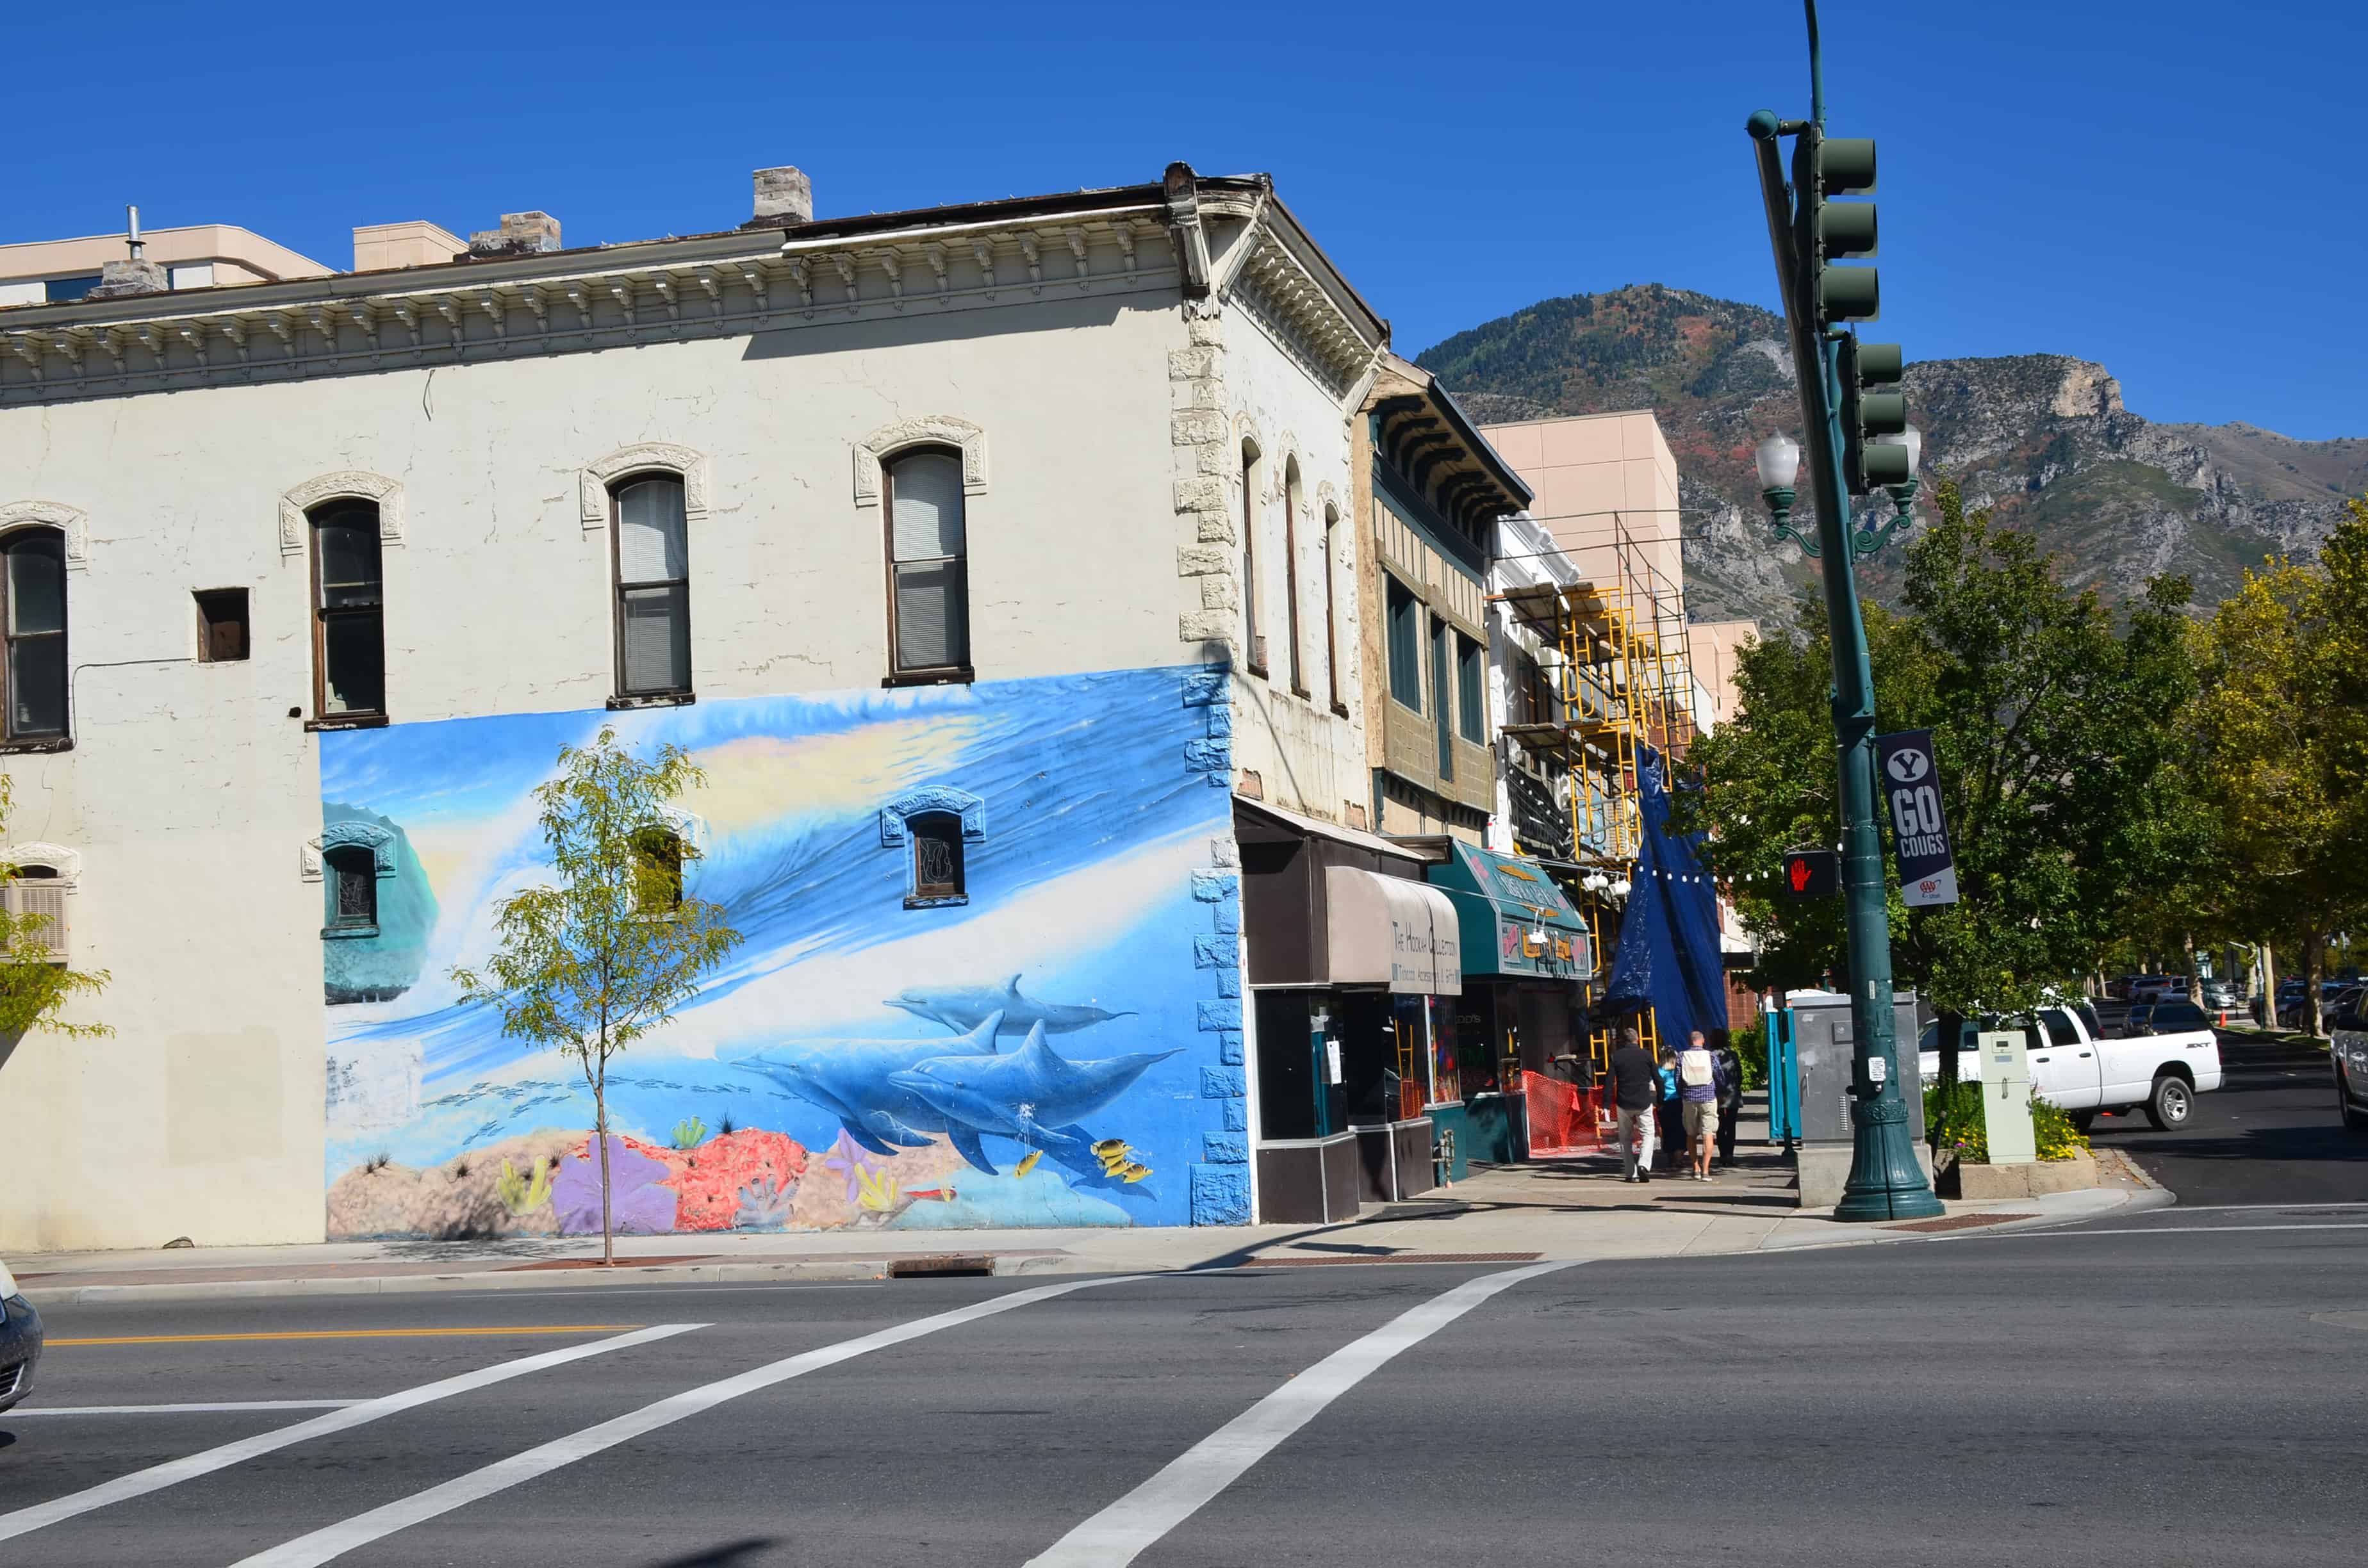 Mural in Provo, Utah